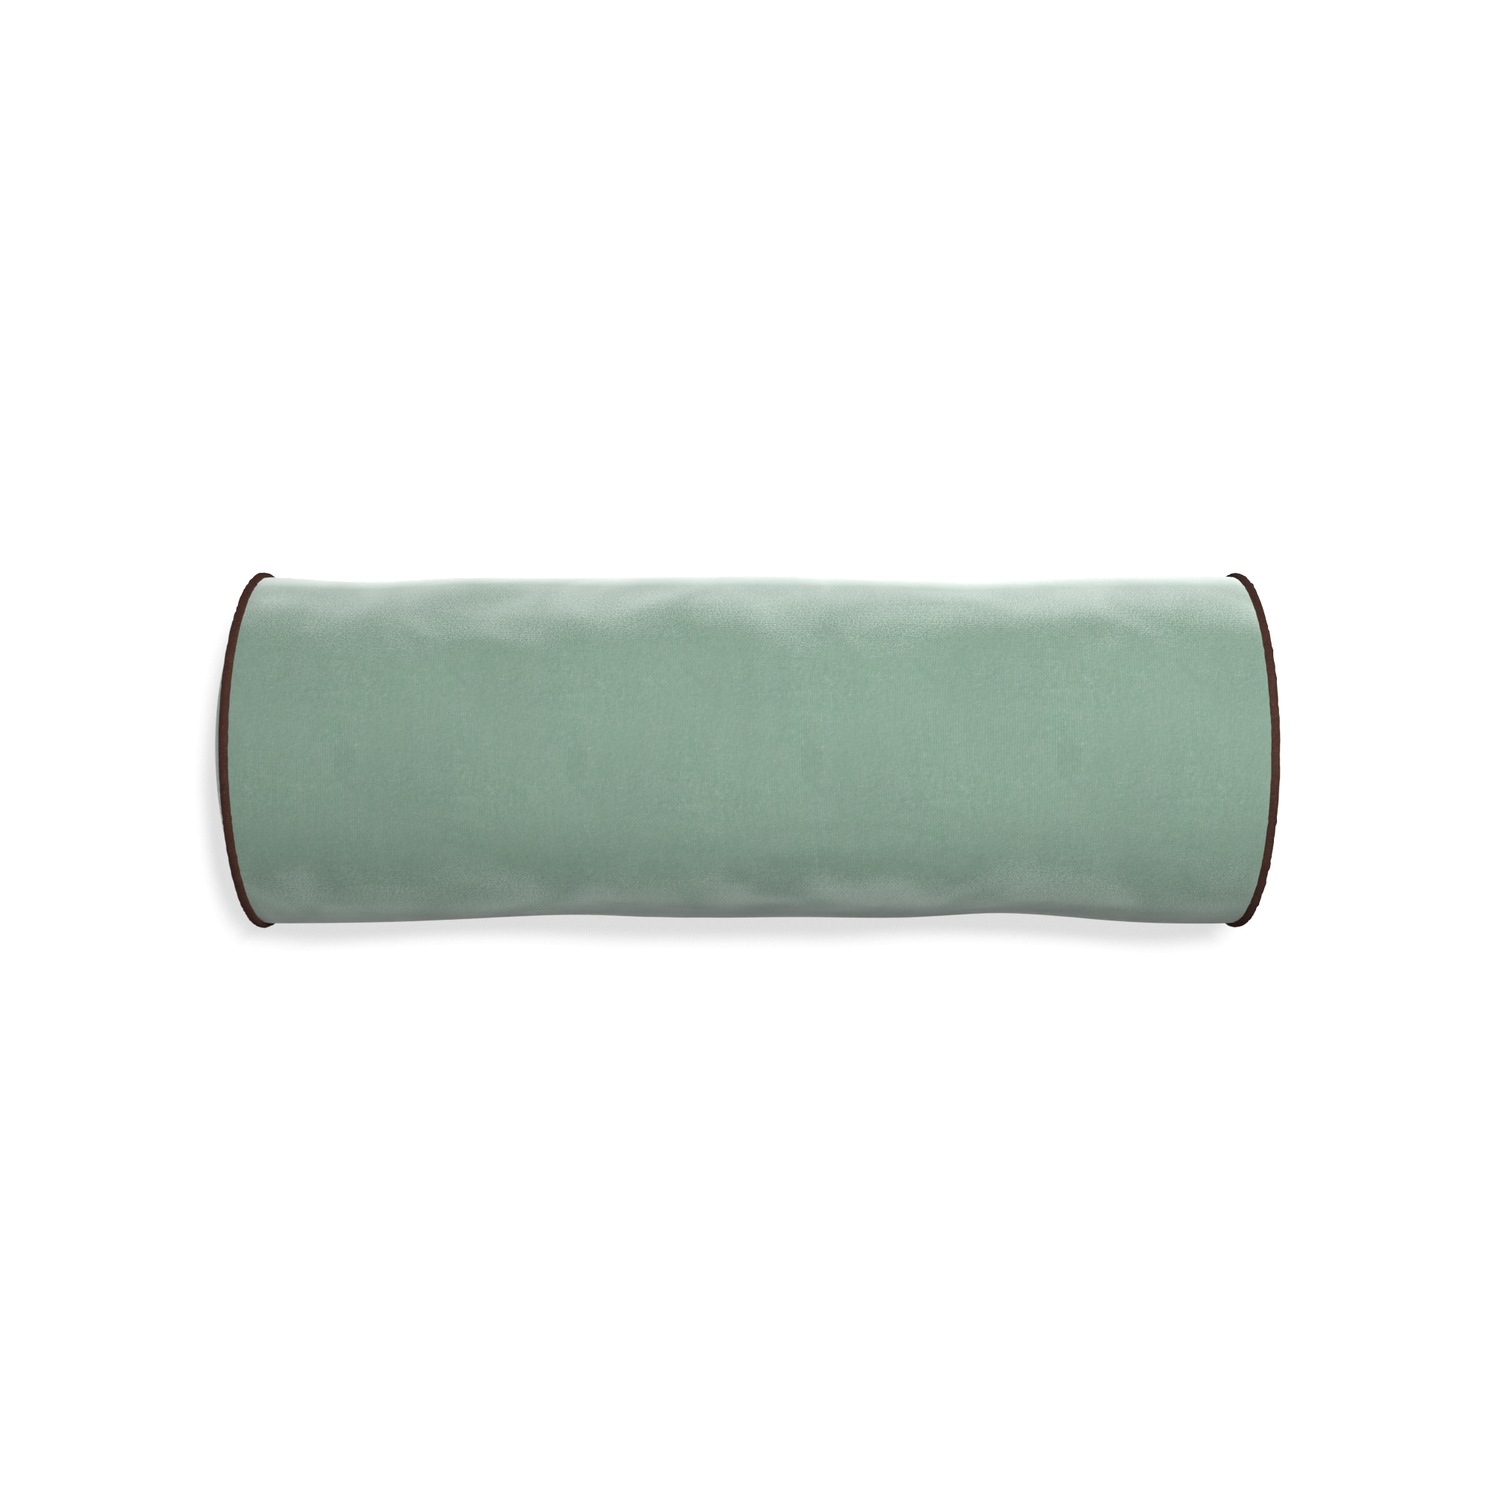 bolster blue green velvet pillow with brown piping